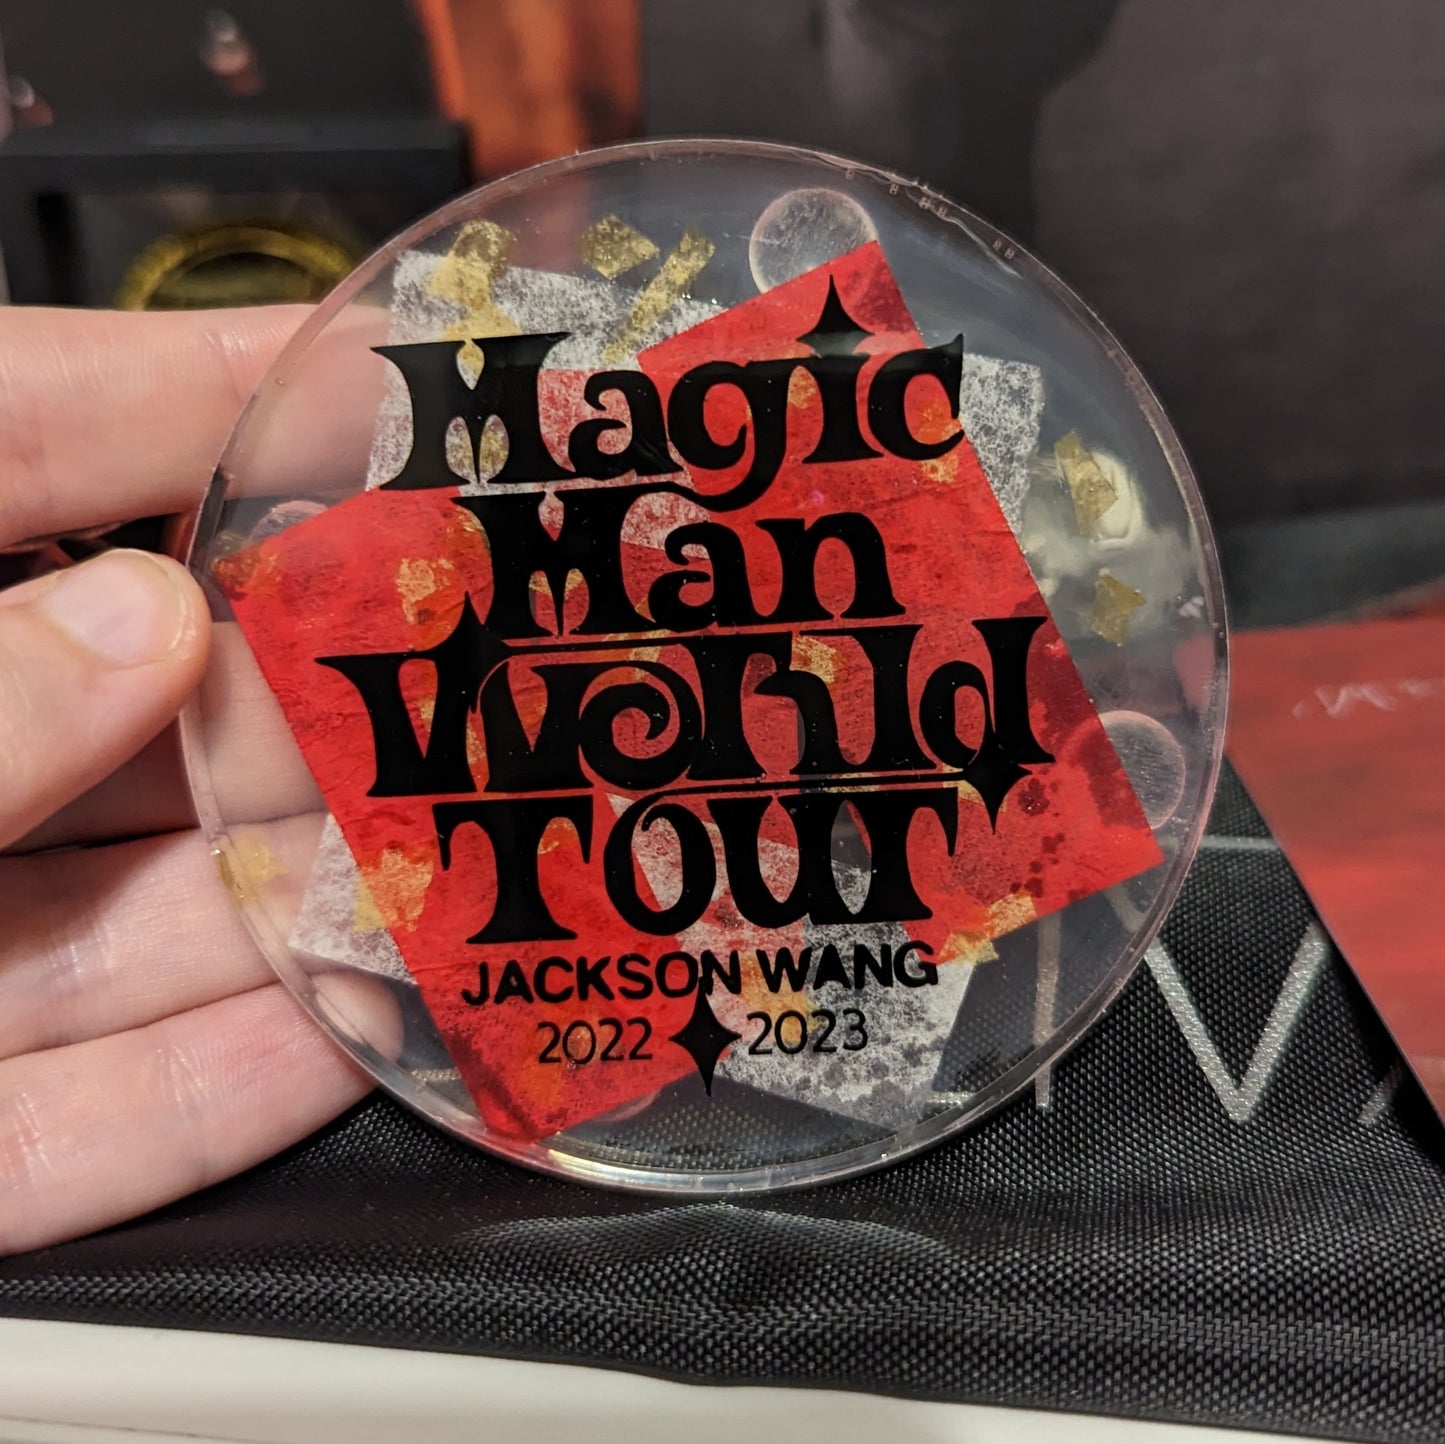 Jackson Wang Will Return To Malaysia For Magic Man World Tour